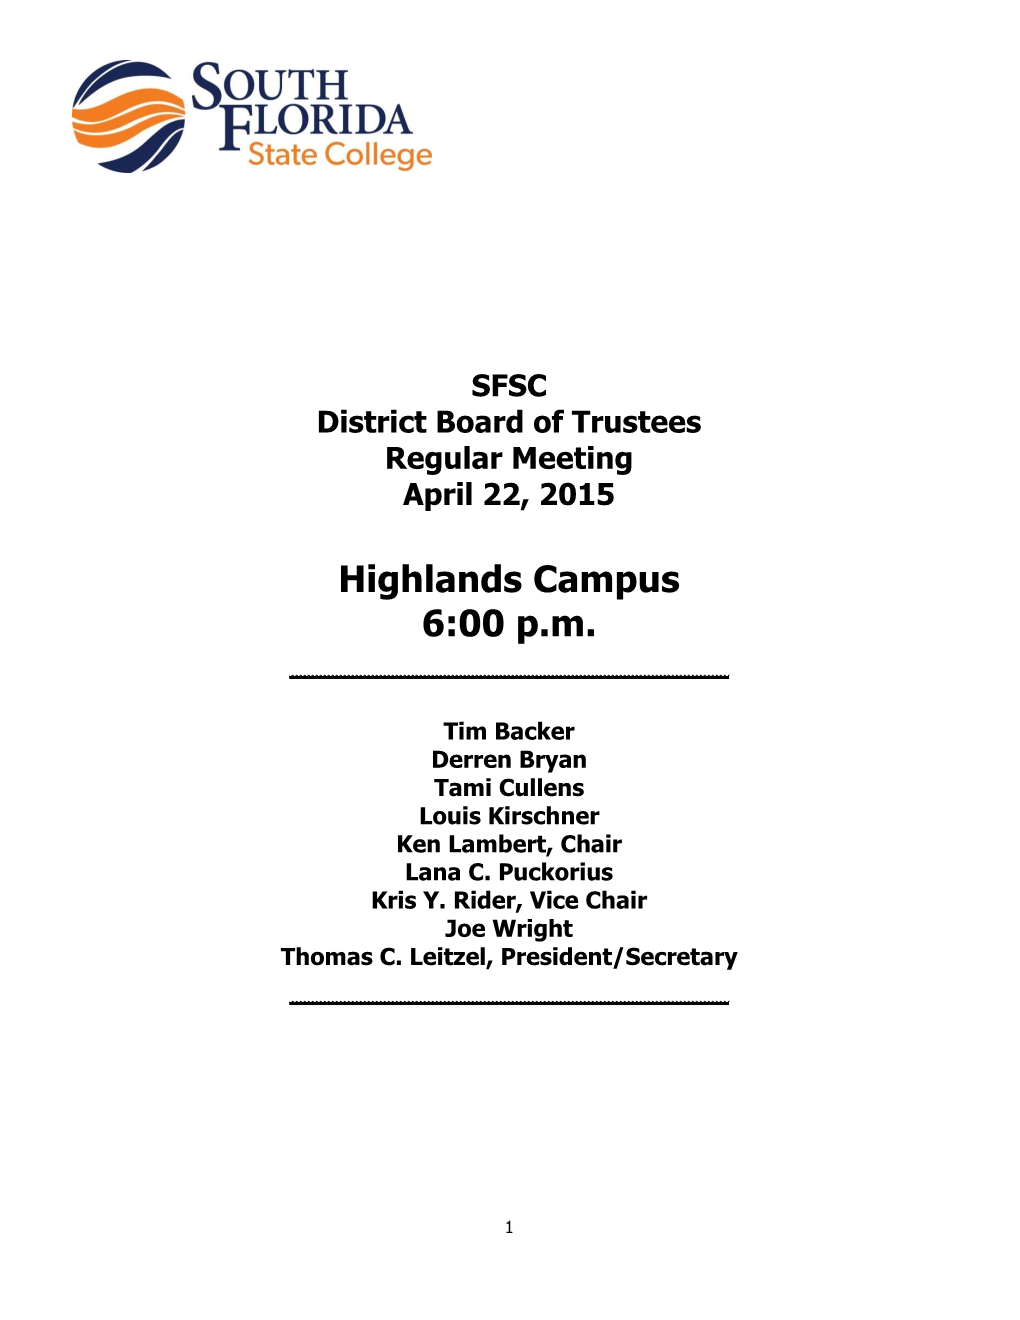 SFSC District Board of Trustees Regular Meeting April 22, 2015